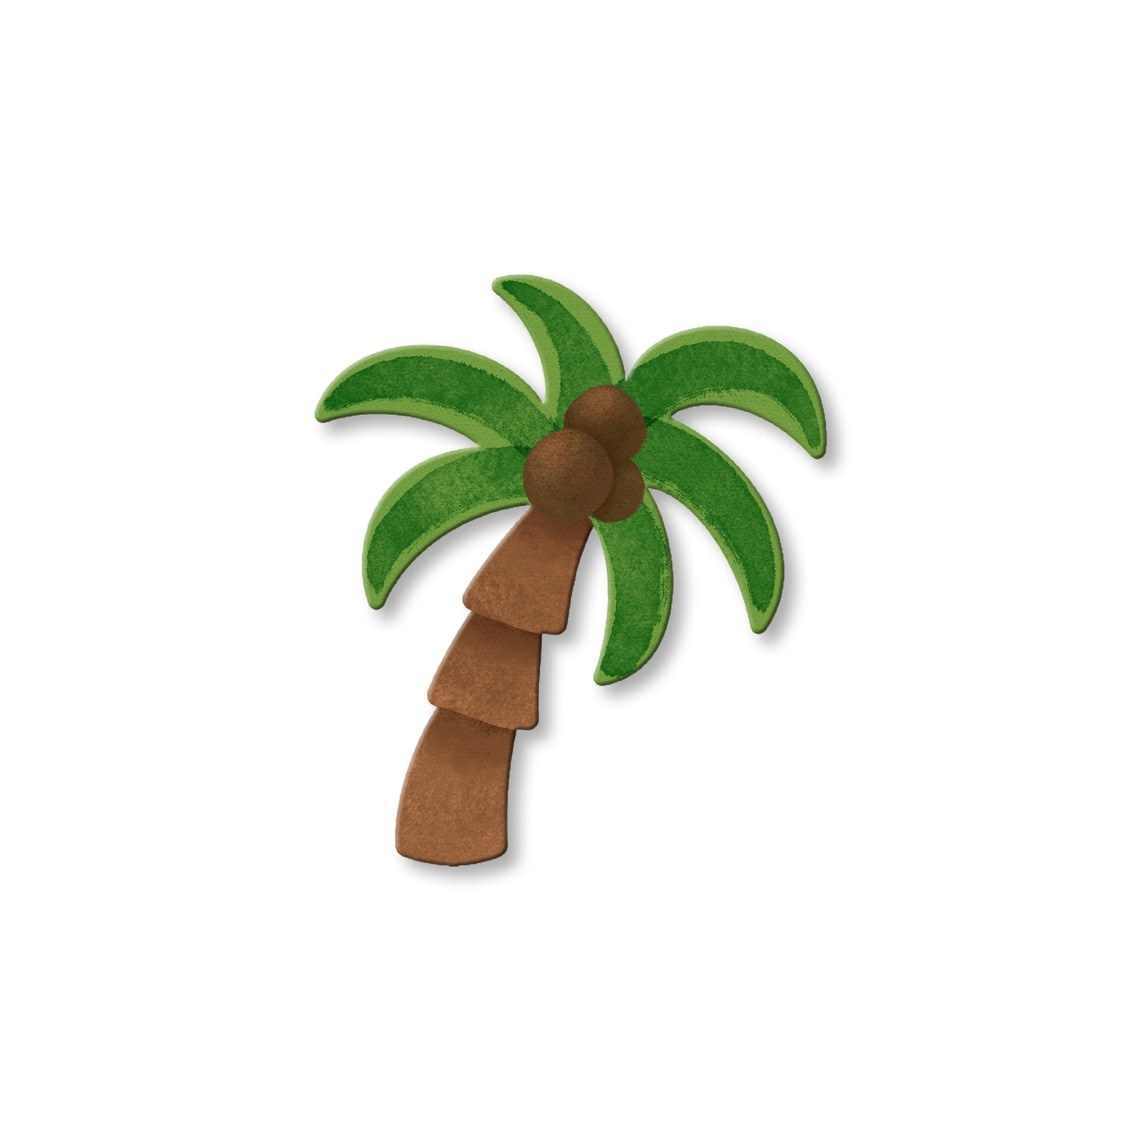 Roeda Studio Palm Tree Single Magnet